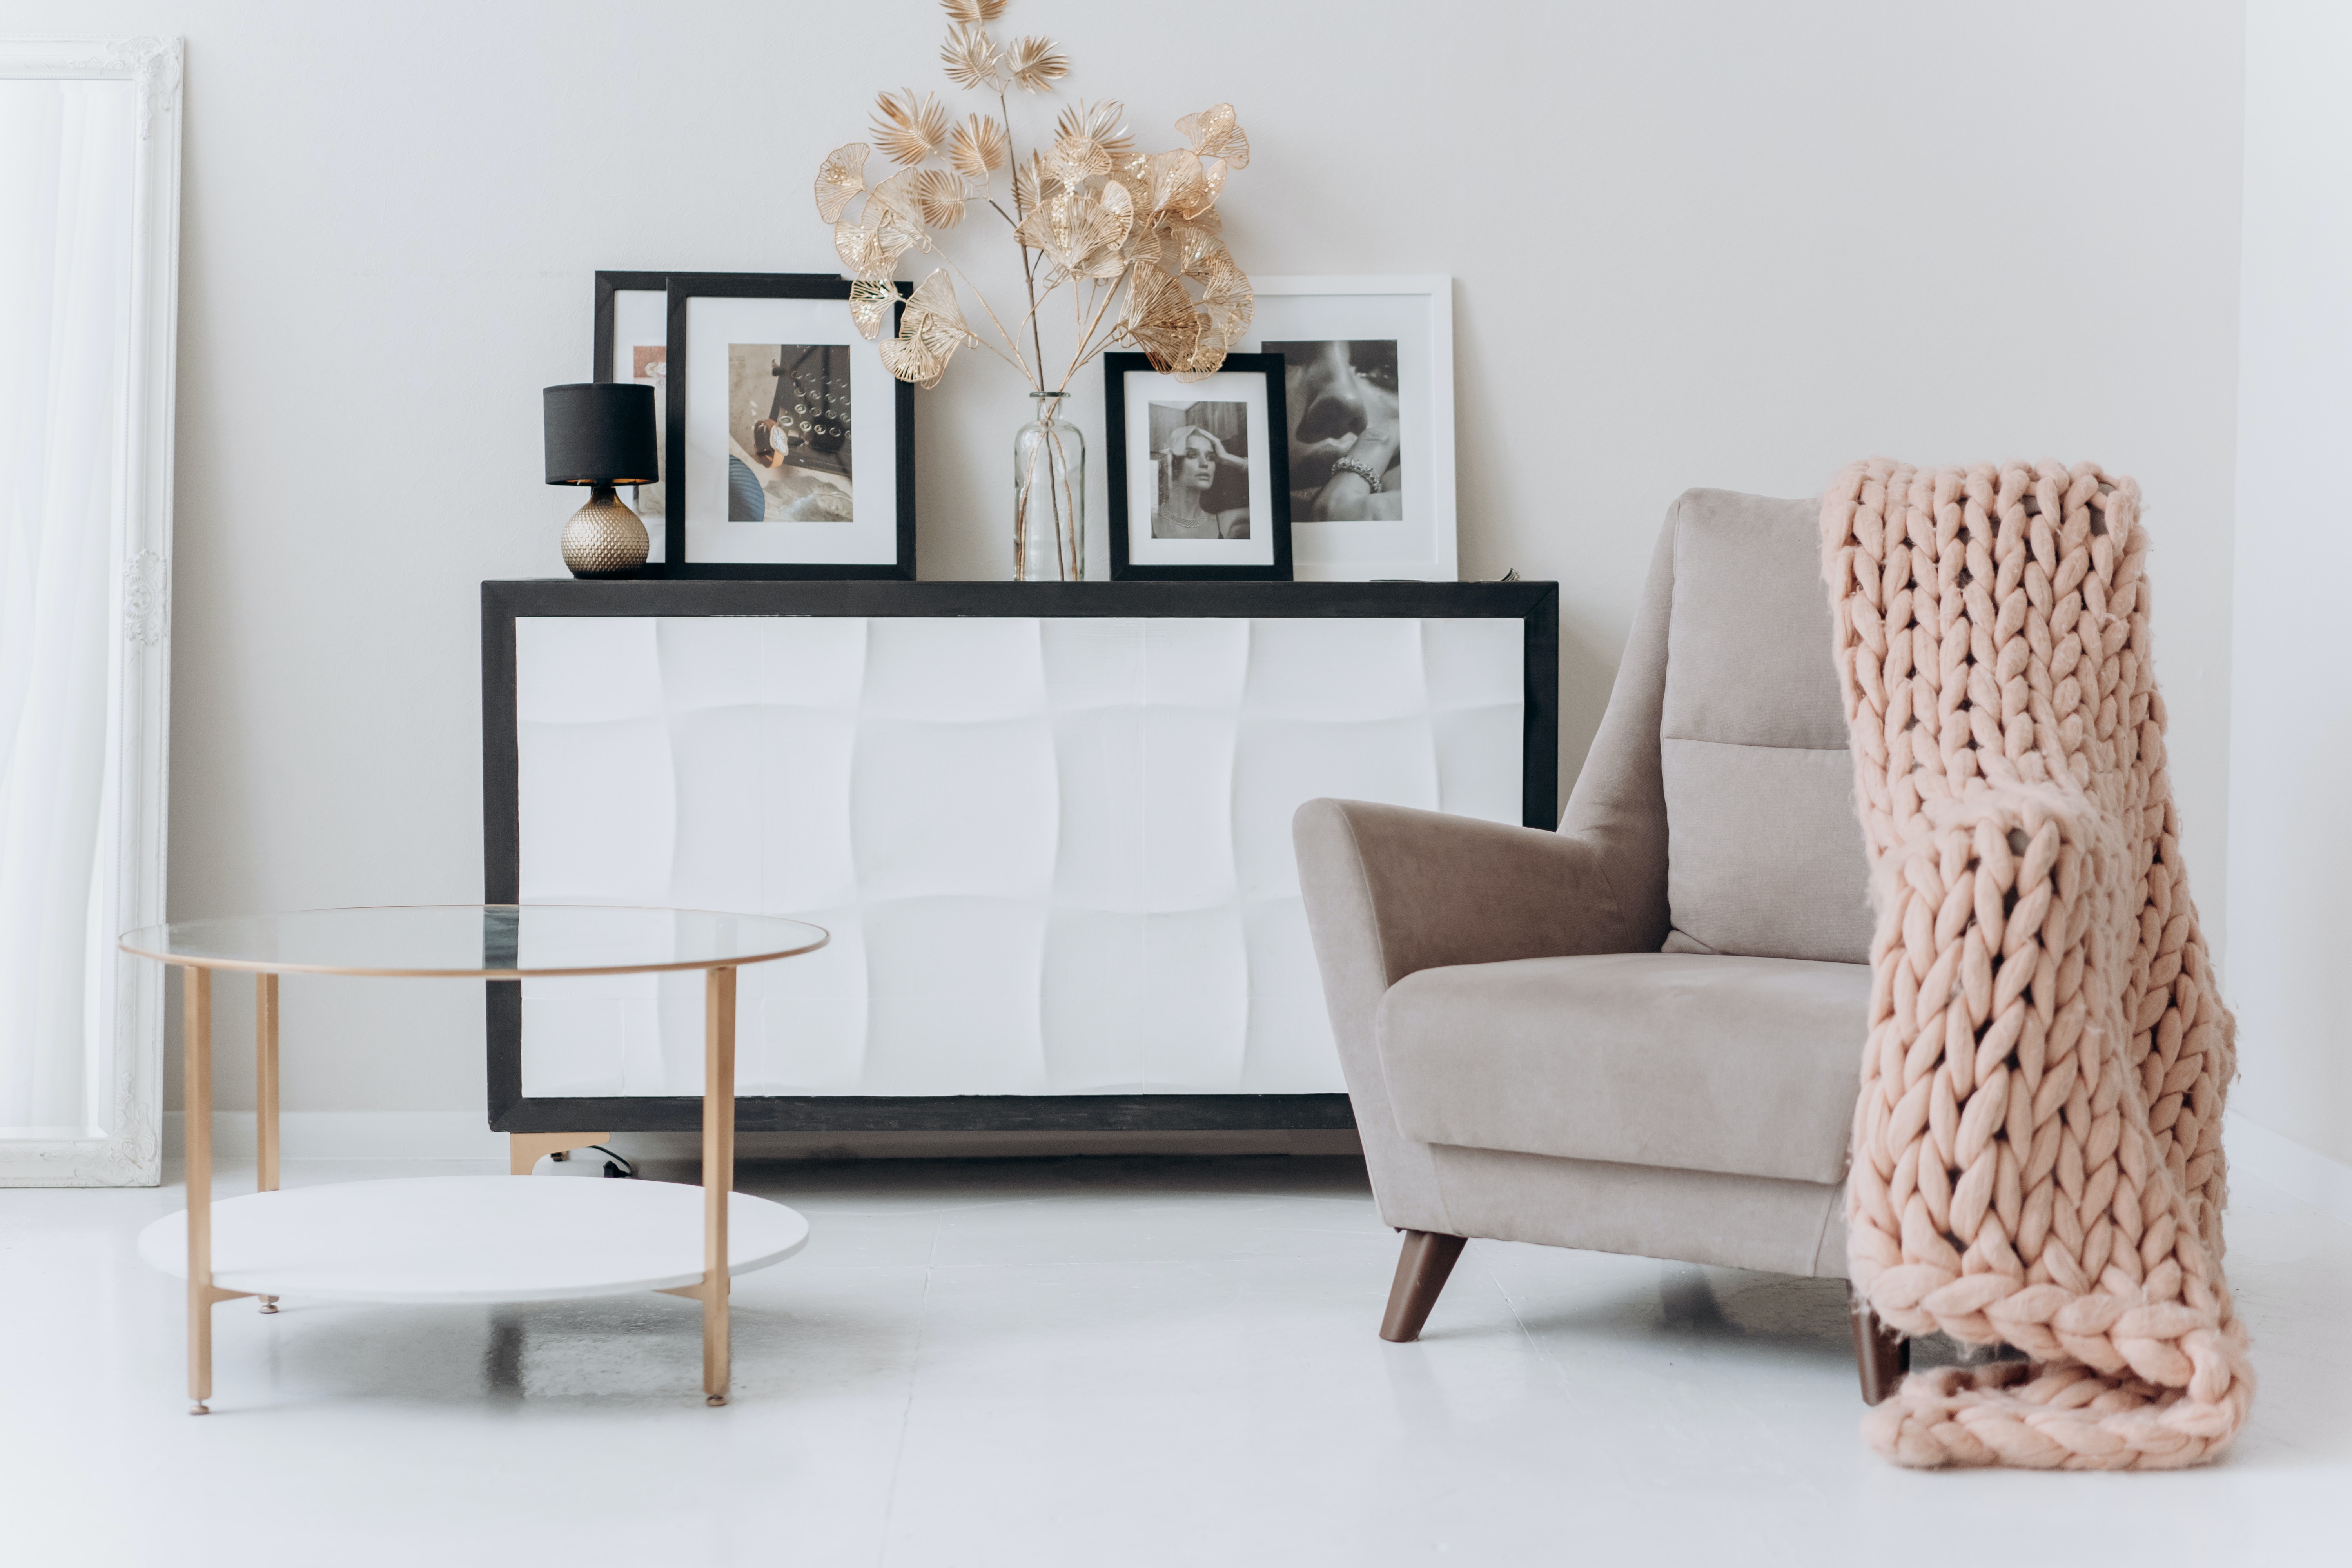 Home Furniture Retailer sees 5:1 ROAS using NaviStone Look-a-Like Audiences